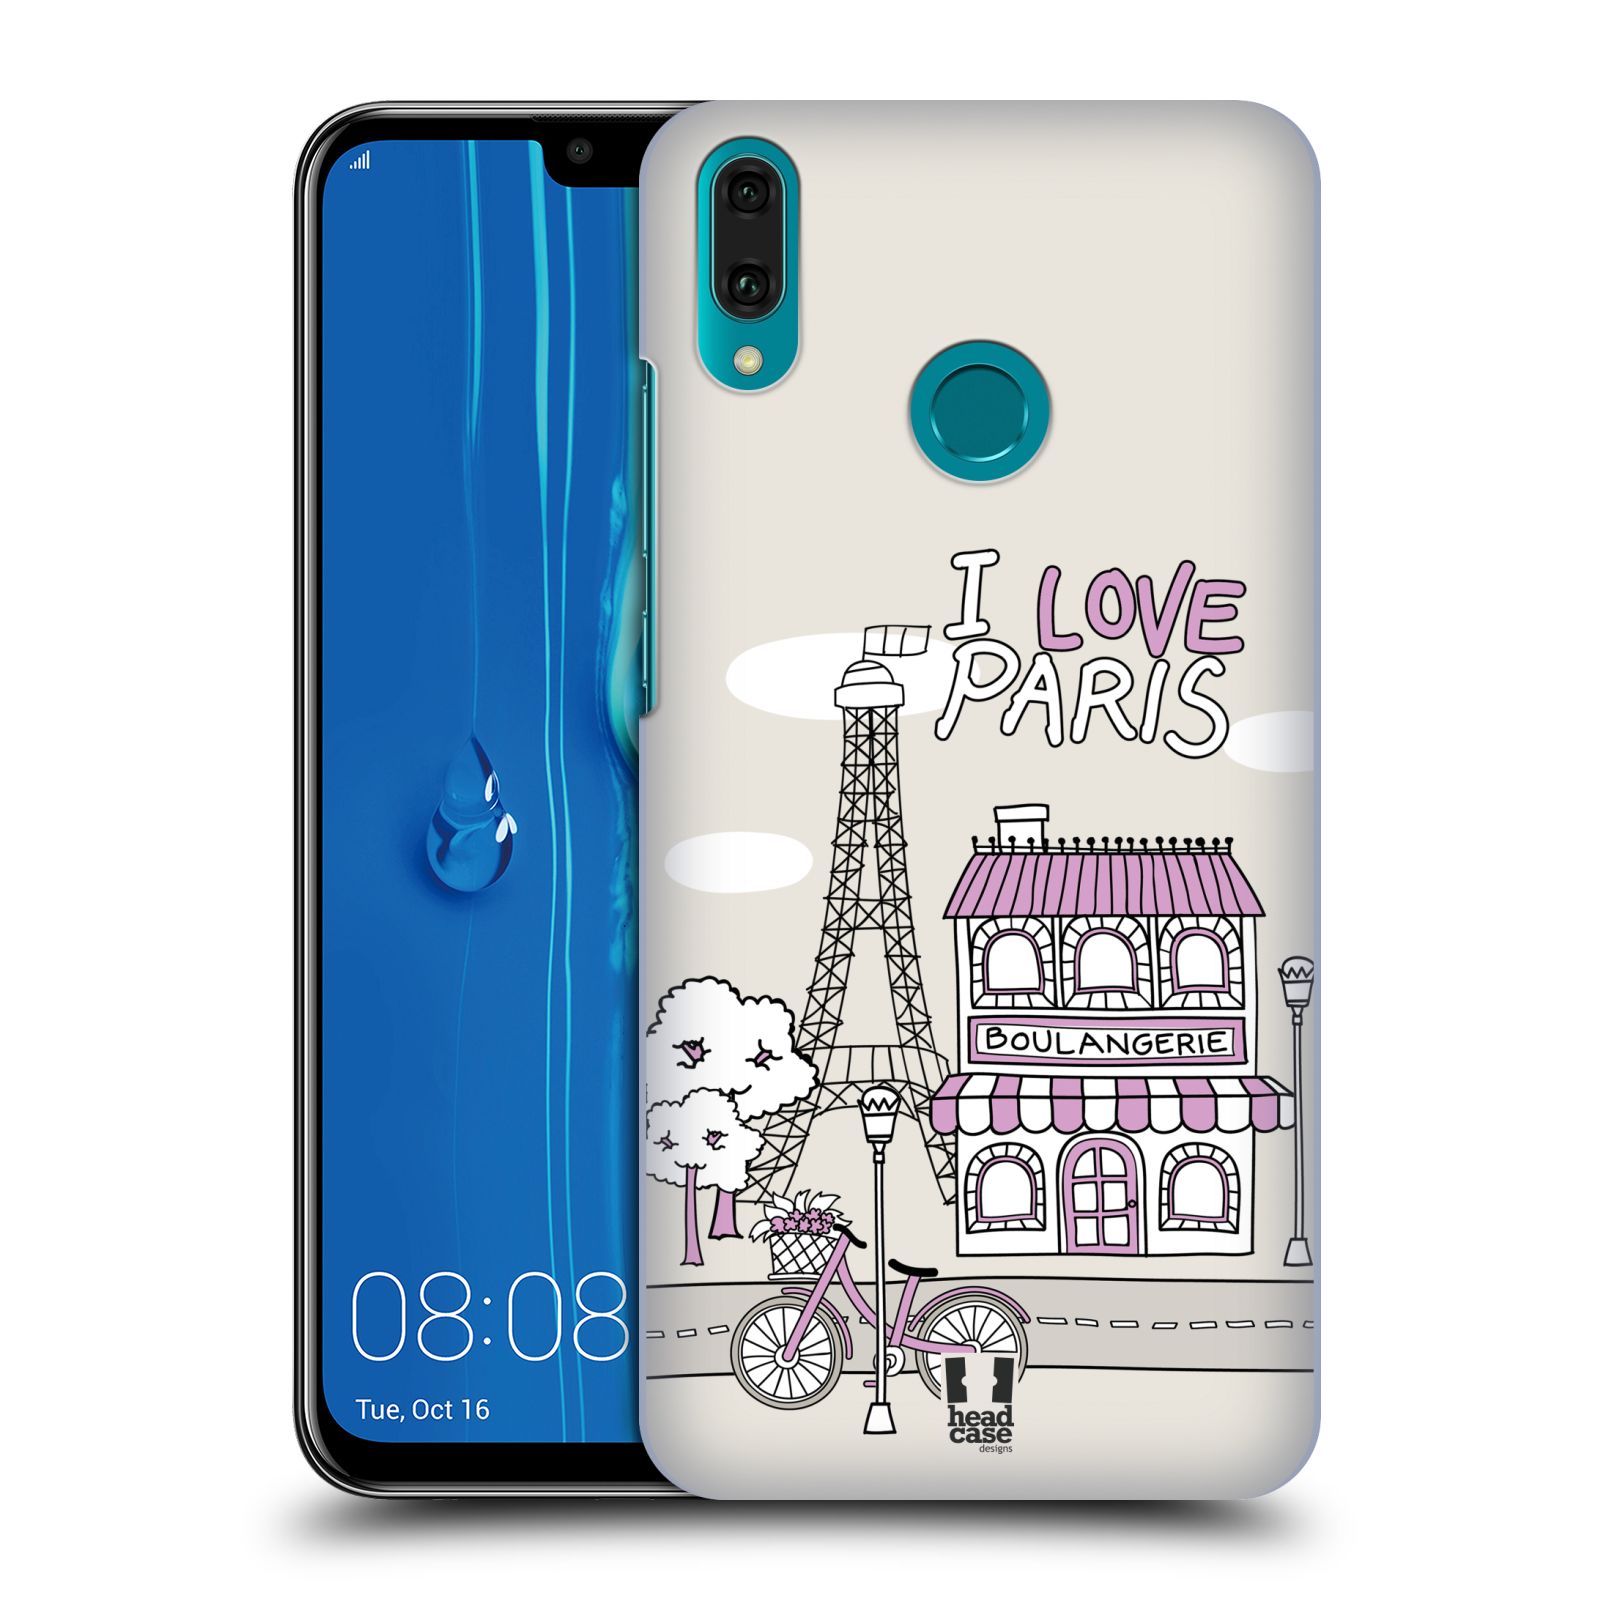 Pouzdro na mobil Huawei Y9 2019 - HEAD CASE - vzor Kreslená městečka FIALOVÁ, Paříž, Francie, I LOVE PARIS